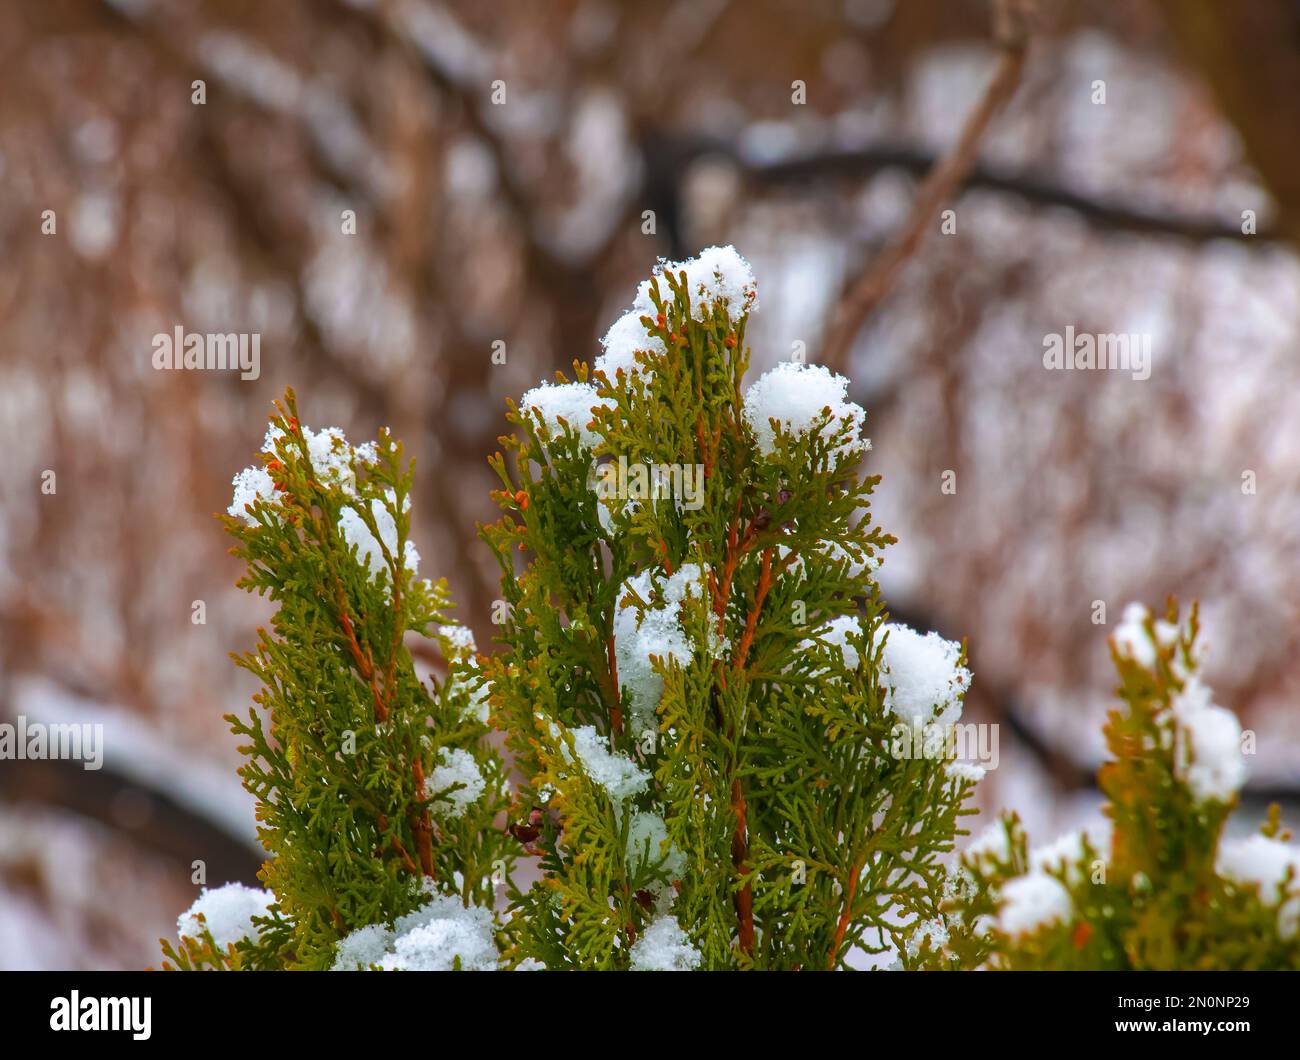 Thuja in the snow. Thuja orientalis Aurea Nana in winter. Green thuja bushes covered with white snow. Stock Photo